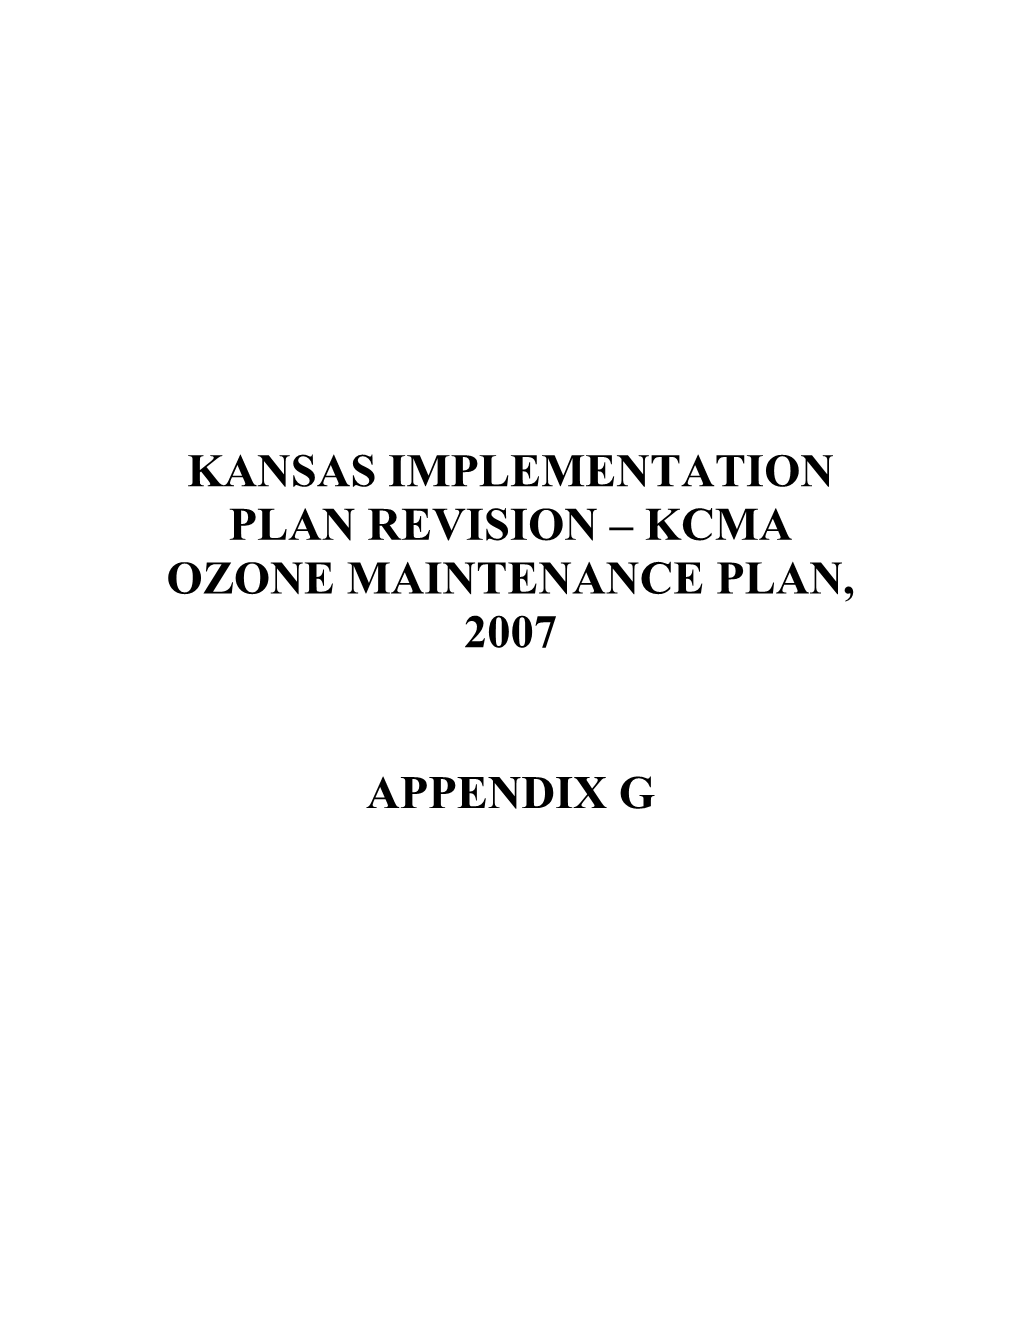 Kcma Ozone Maintenance Plan, 2007 Appendix G